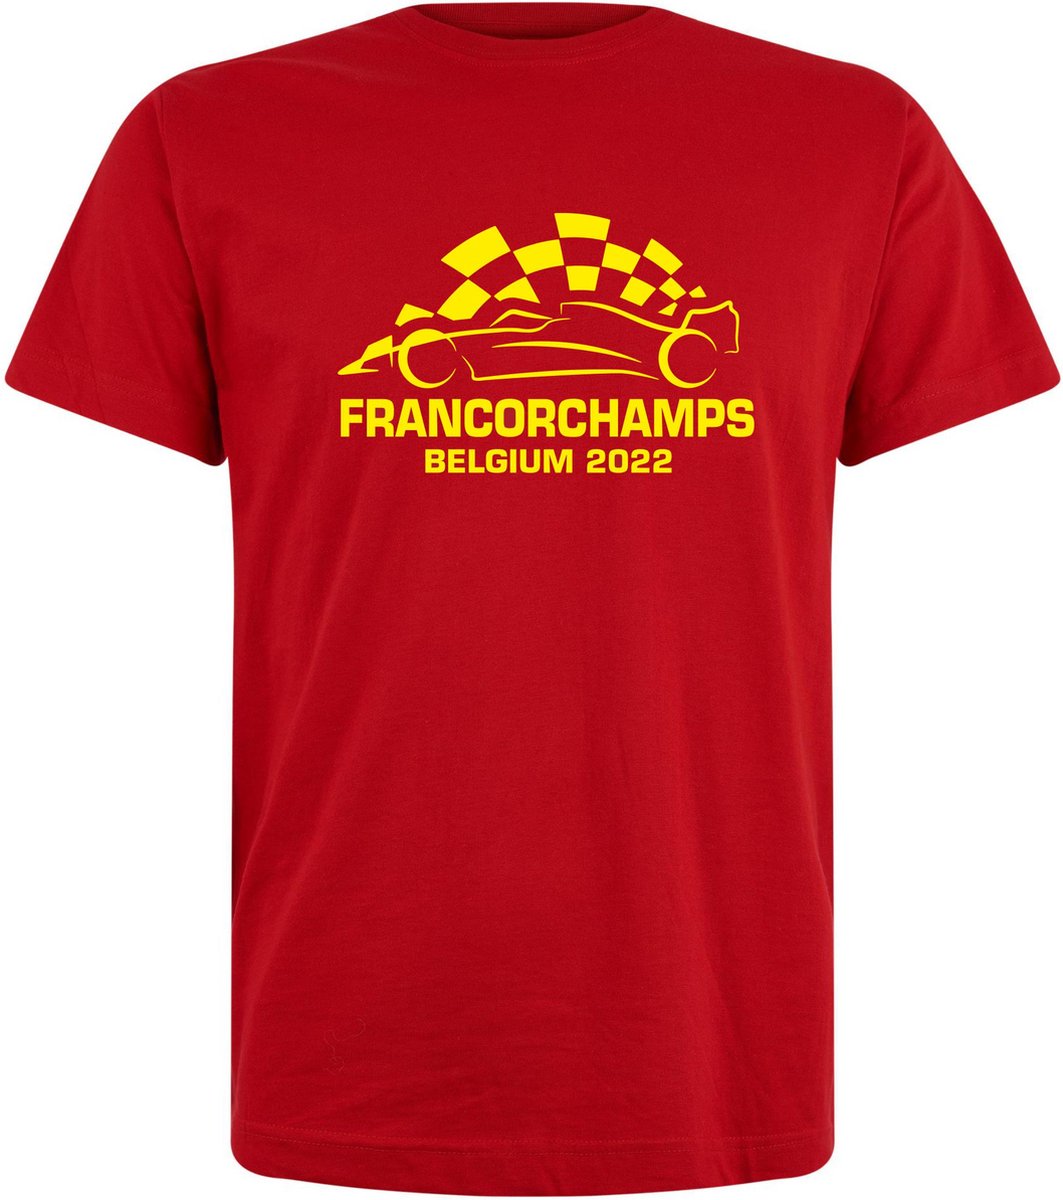 T-shirt Francorchamps Belgium 2022 met raceauto | Max Verstappen / Red Bull Racing / Formule 1 fan | Grand Prix Circuit Spa-Francorchamps | kleding shirt | Rood | maat 5XL